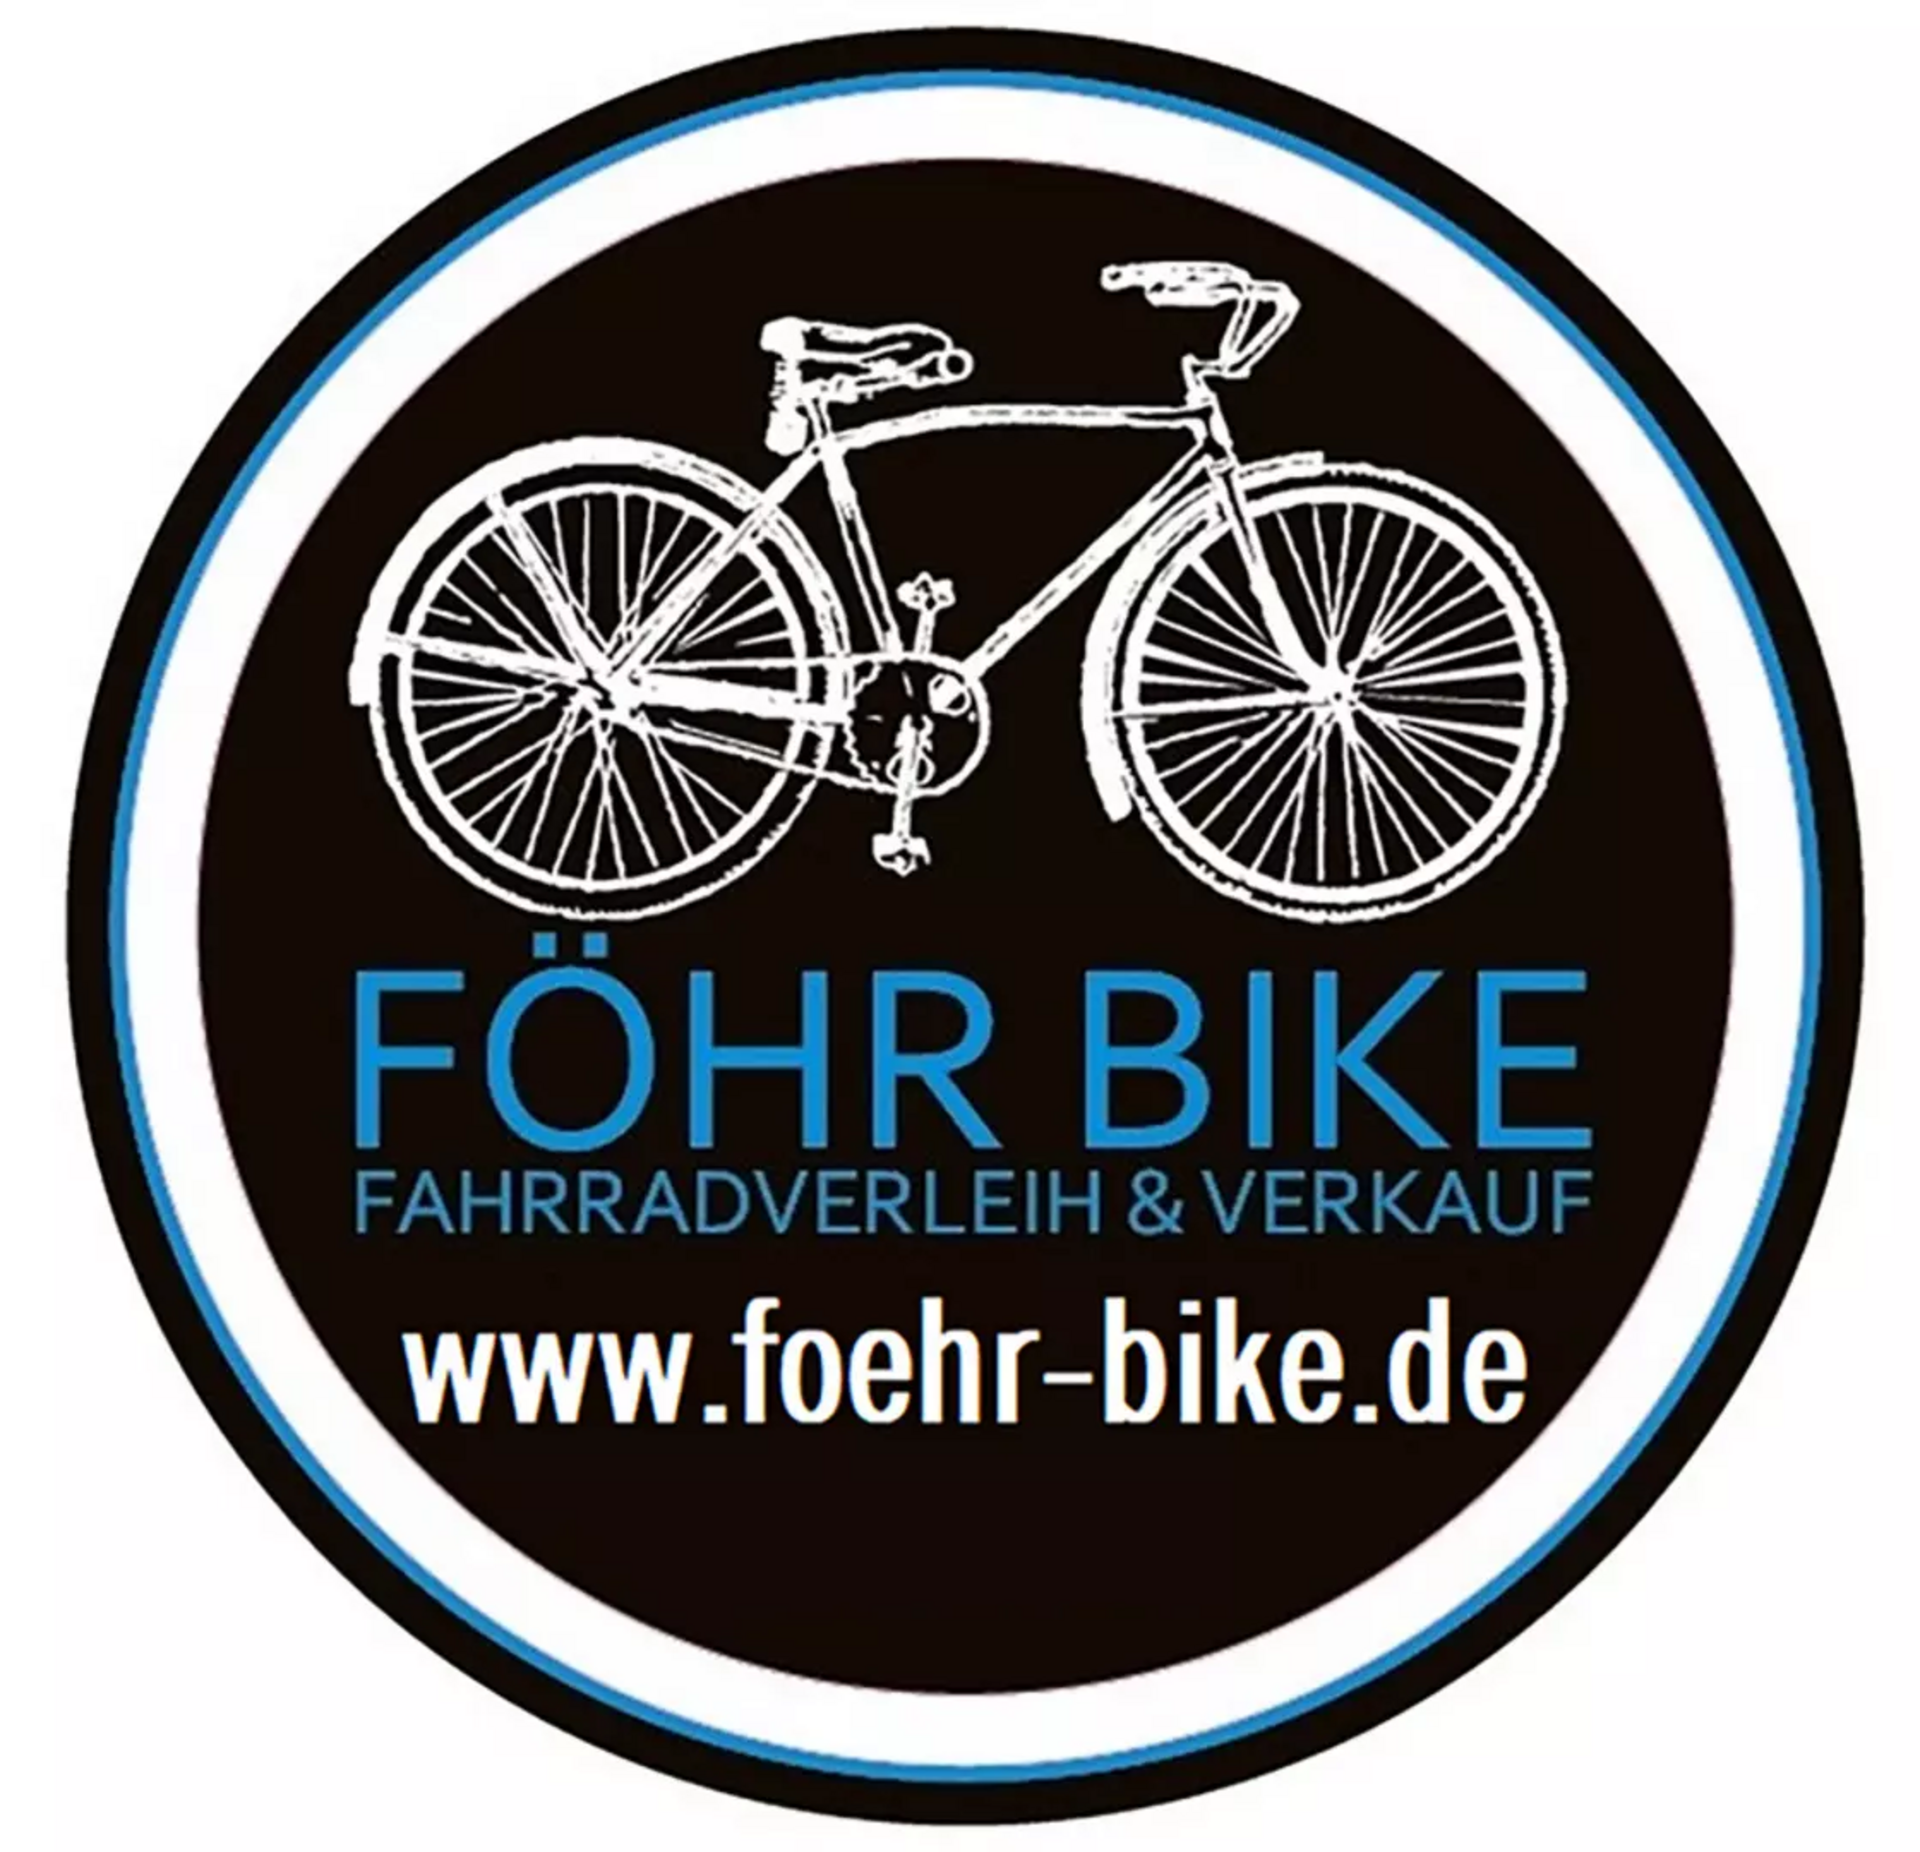 csm_117531015-images_fohr-bike-logo-2019_neu.jpg_a8862751f9